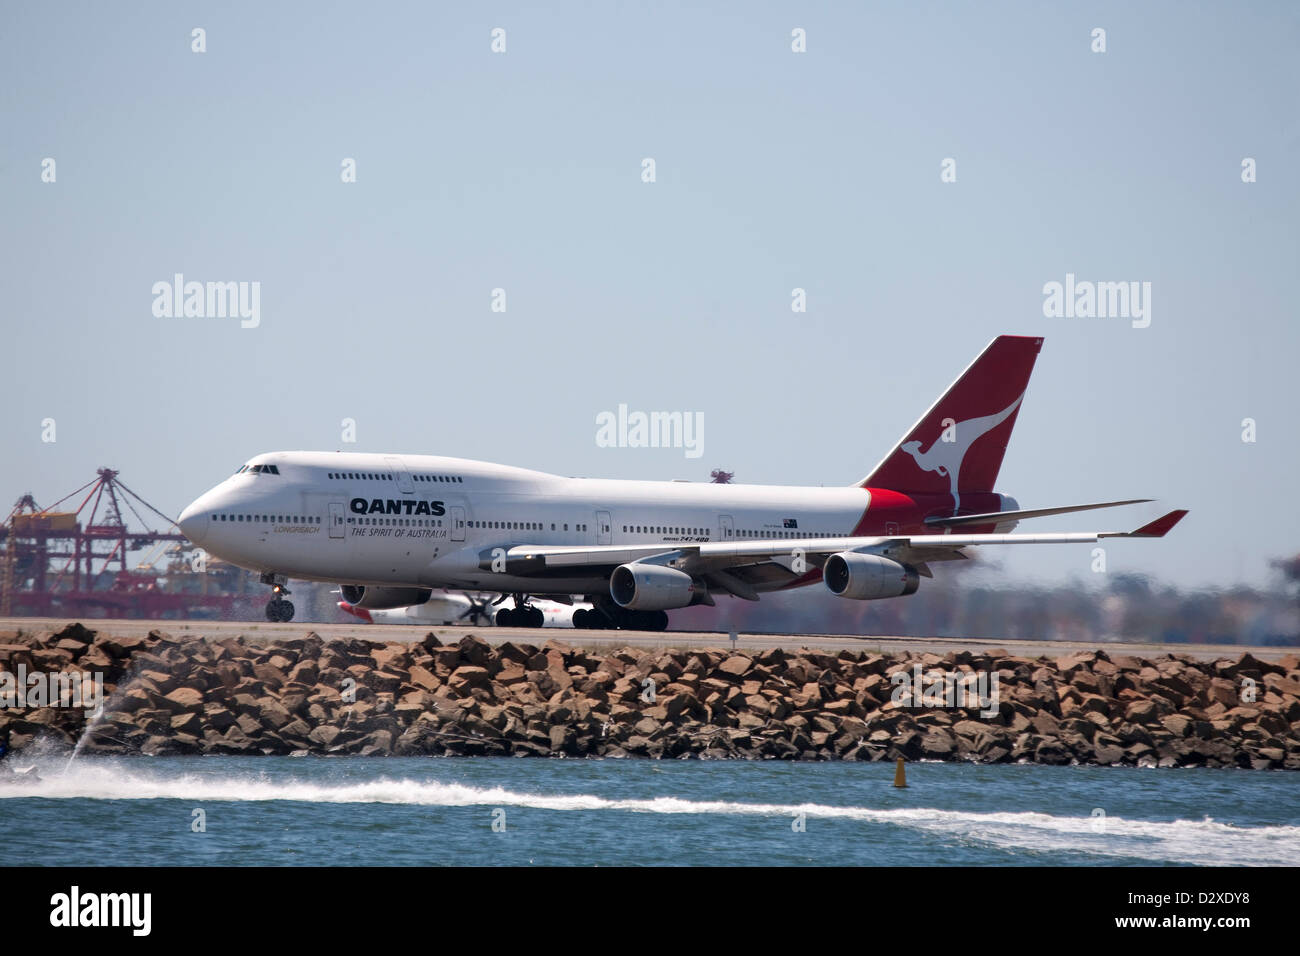 Qantas Boeing 747-400 Jumbo Jet Aircraft 'City of Darwin' landing at Kingsford Smith Airport Sydney Australia Stock Photo